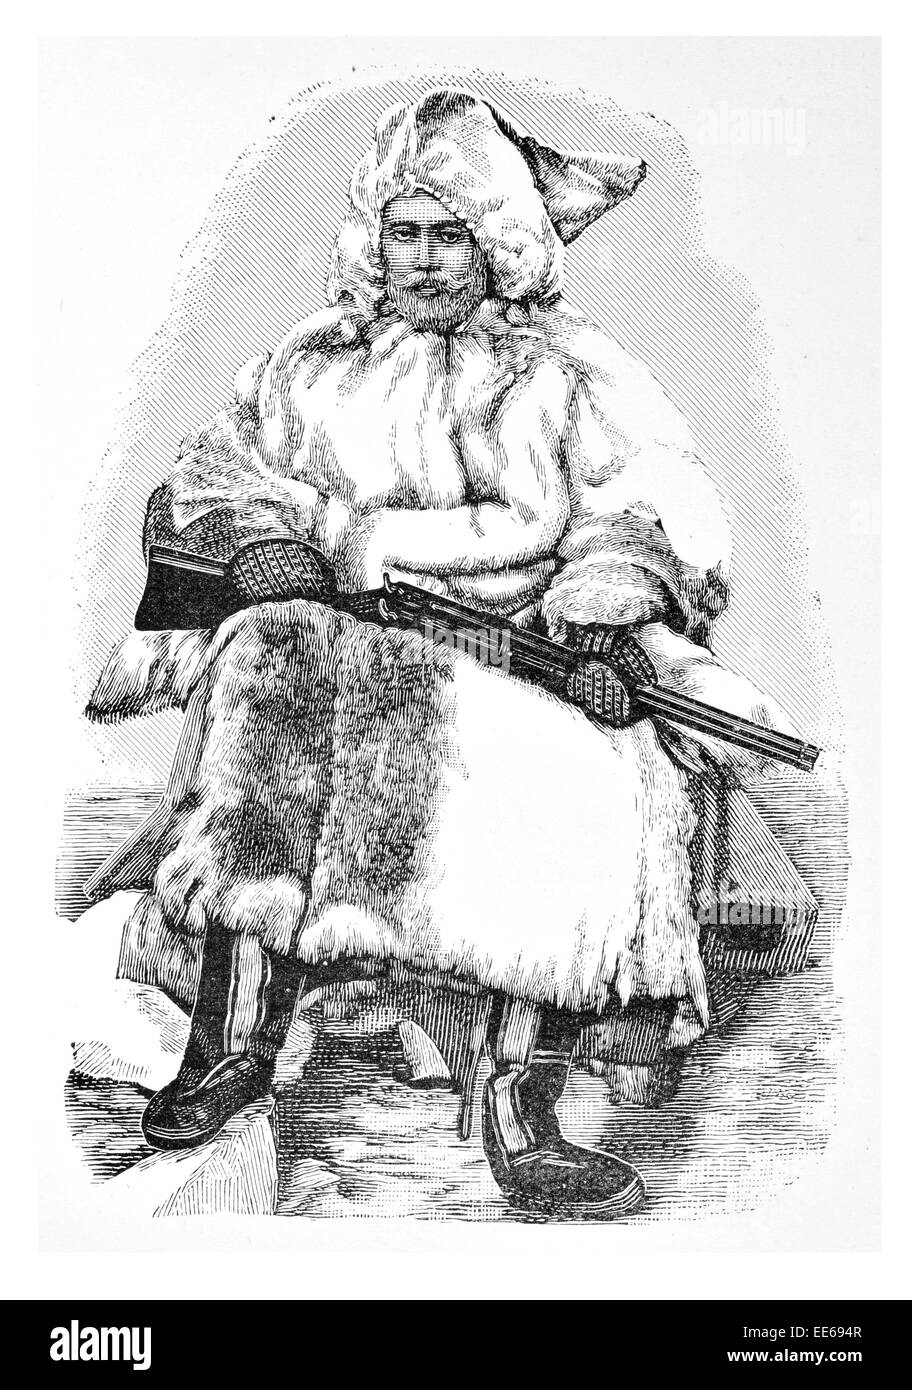 Arctic Winter Clothing Fridtjof Nansen fur coat hunting rifle Norwegian explorer scientist diplomat Nobel Peace Prize laureate Stock Photo